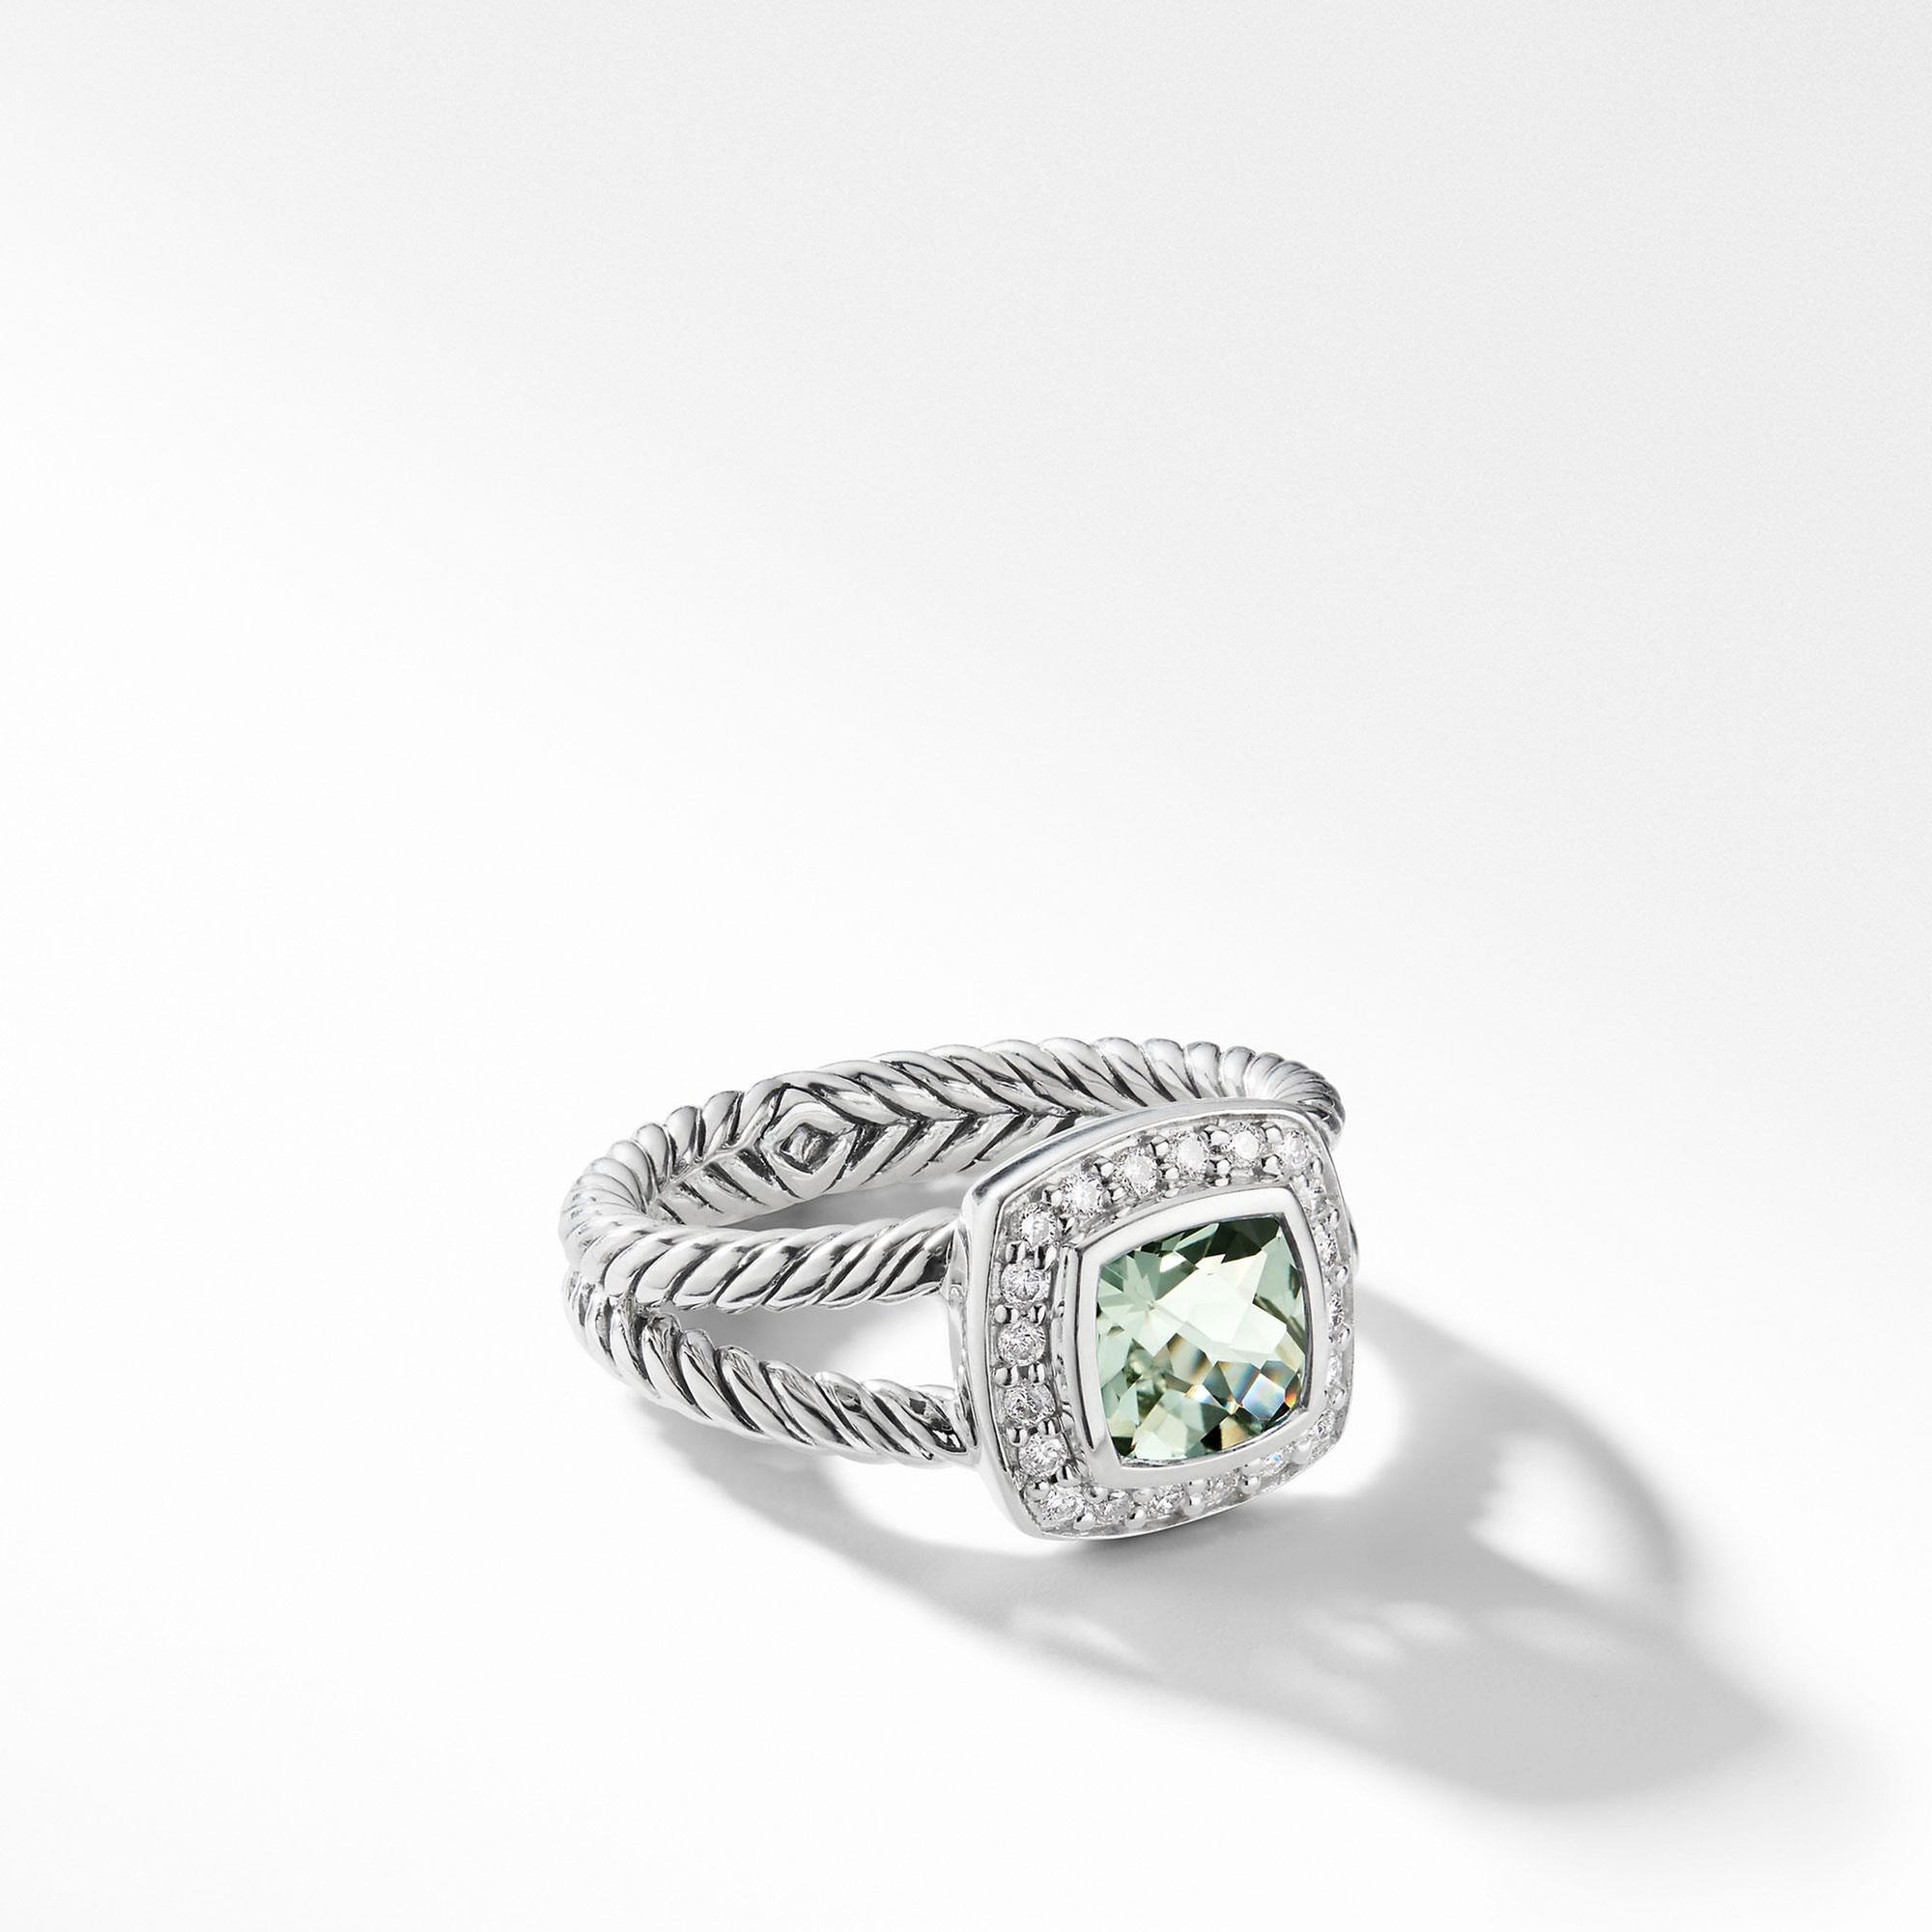 David Yurman Petite Albion Ring with Prasiolite and Diamonds - Size 6.5